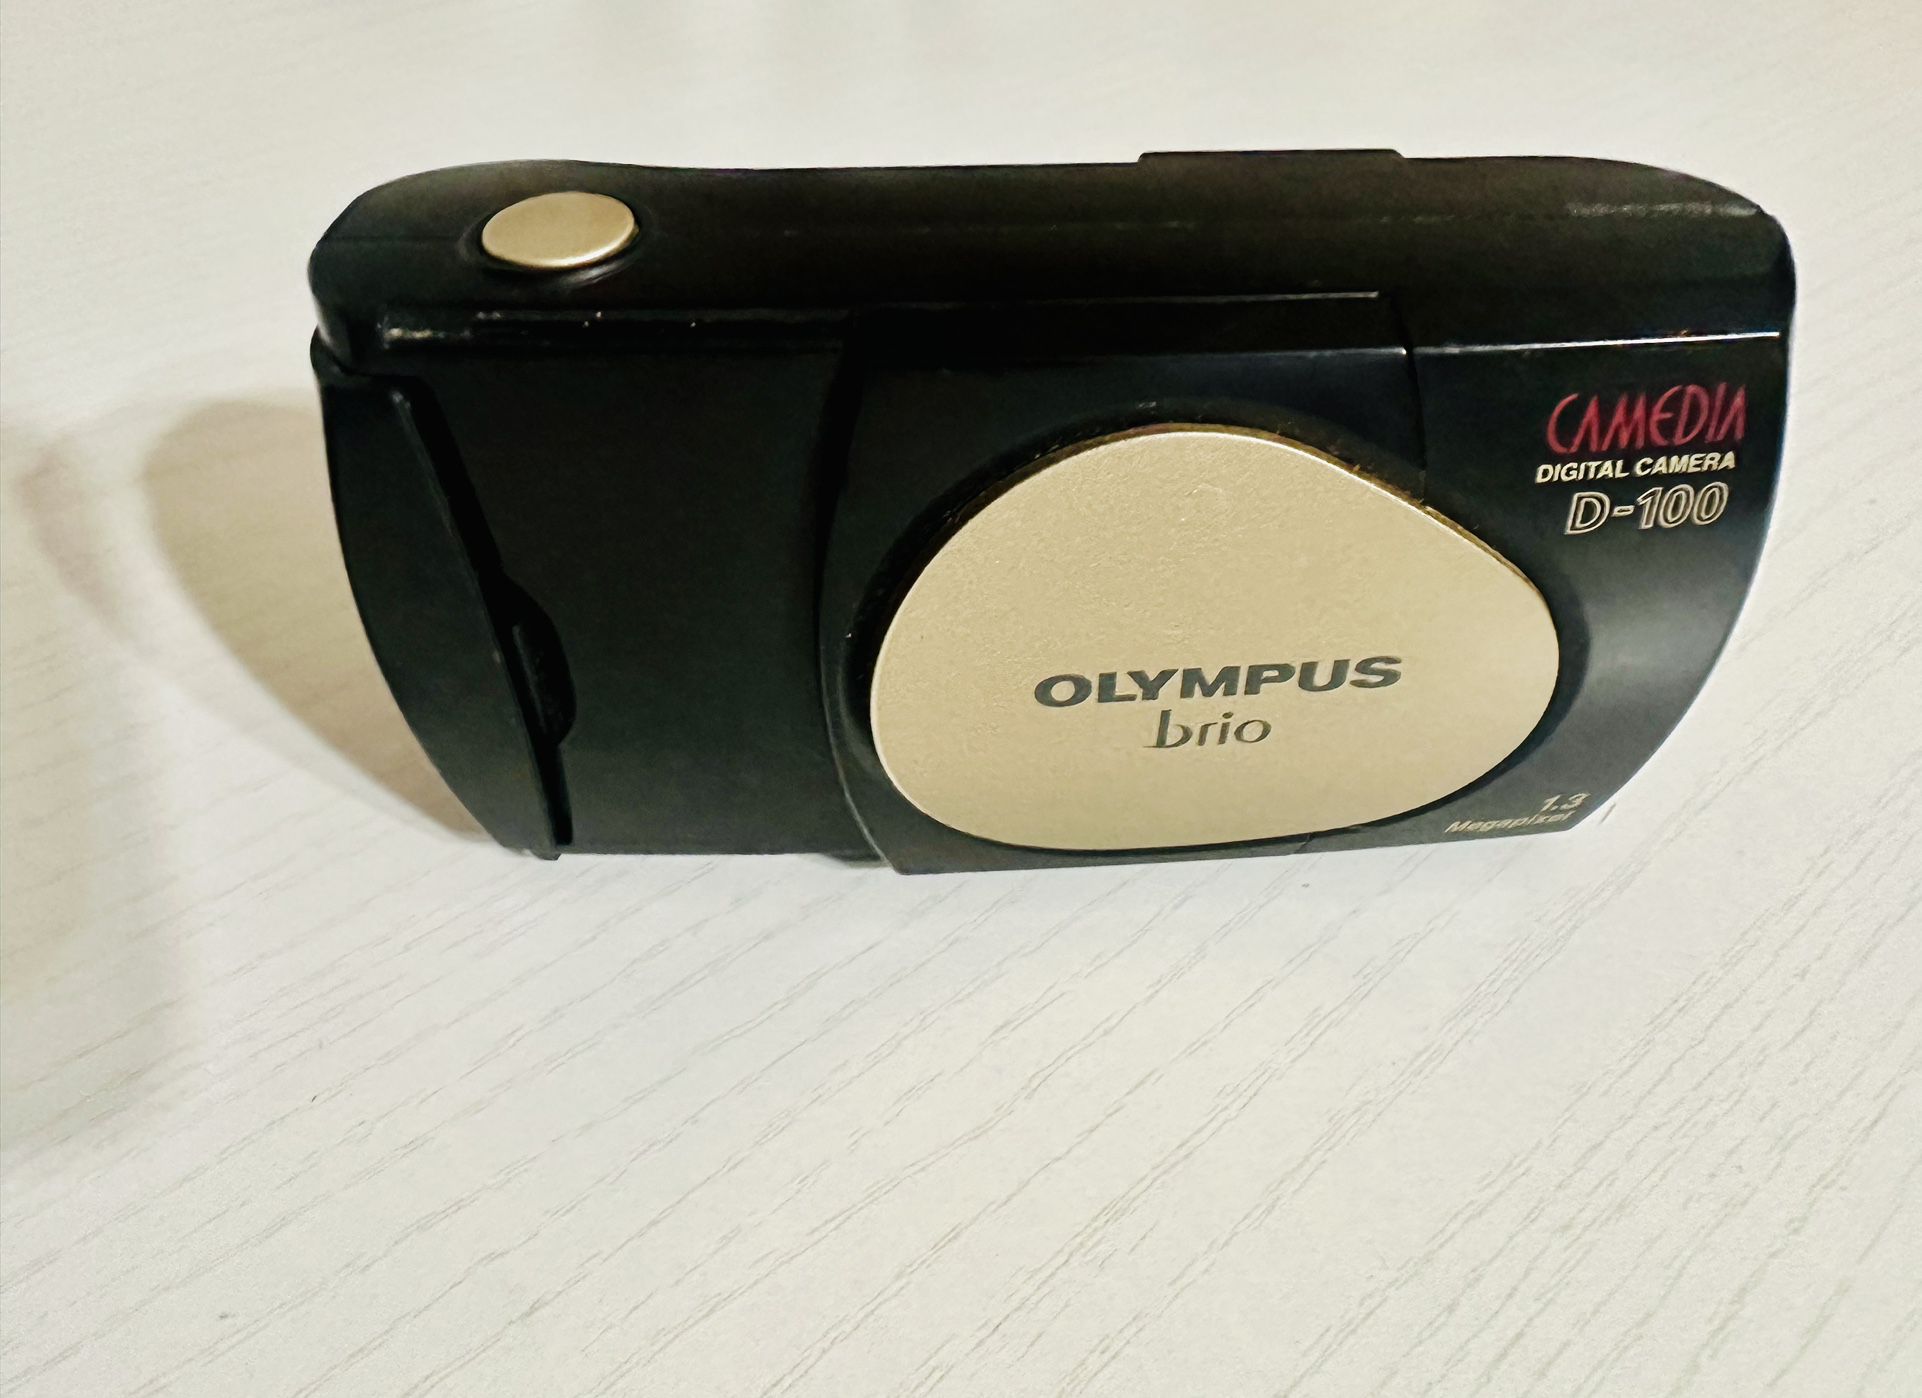 Olympus Brio D 100 Digital Camera Camedia 1.3 Megapixel Black w Memory Card